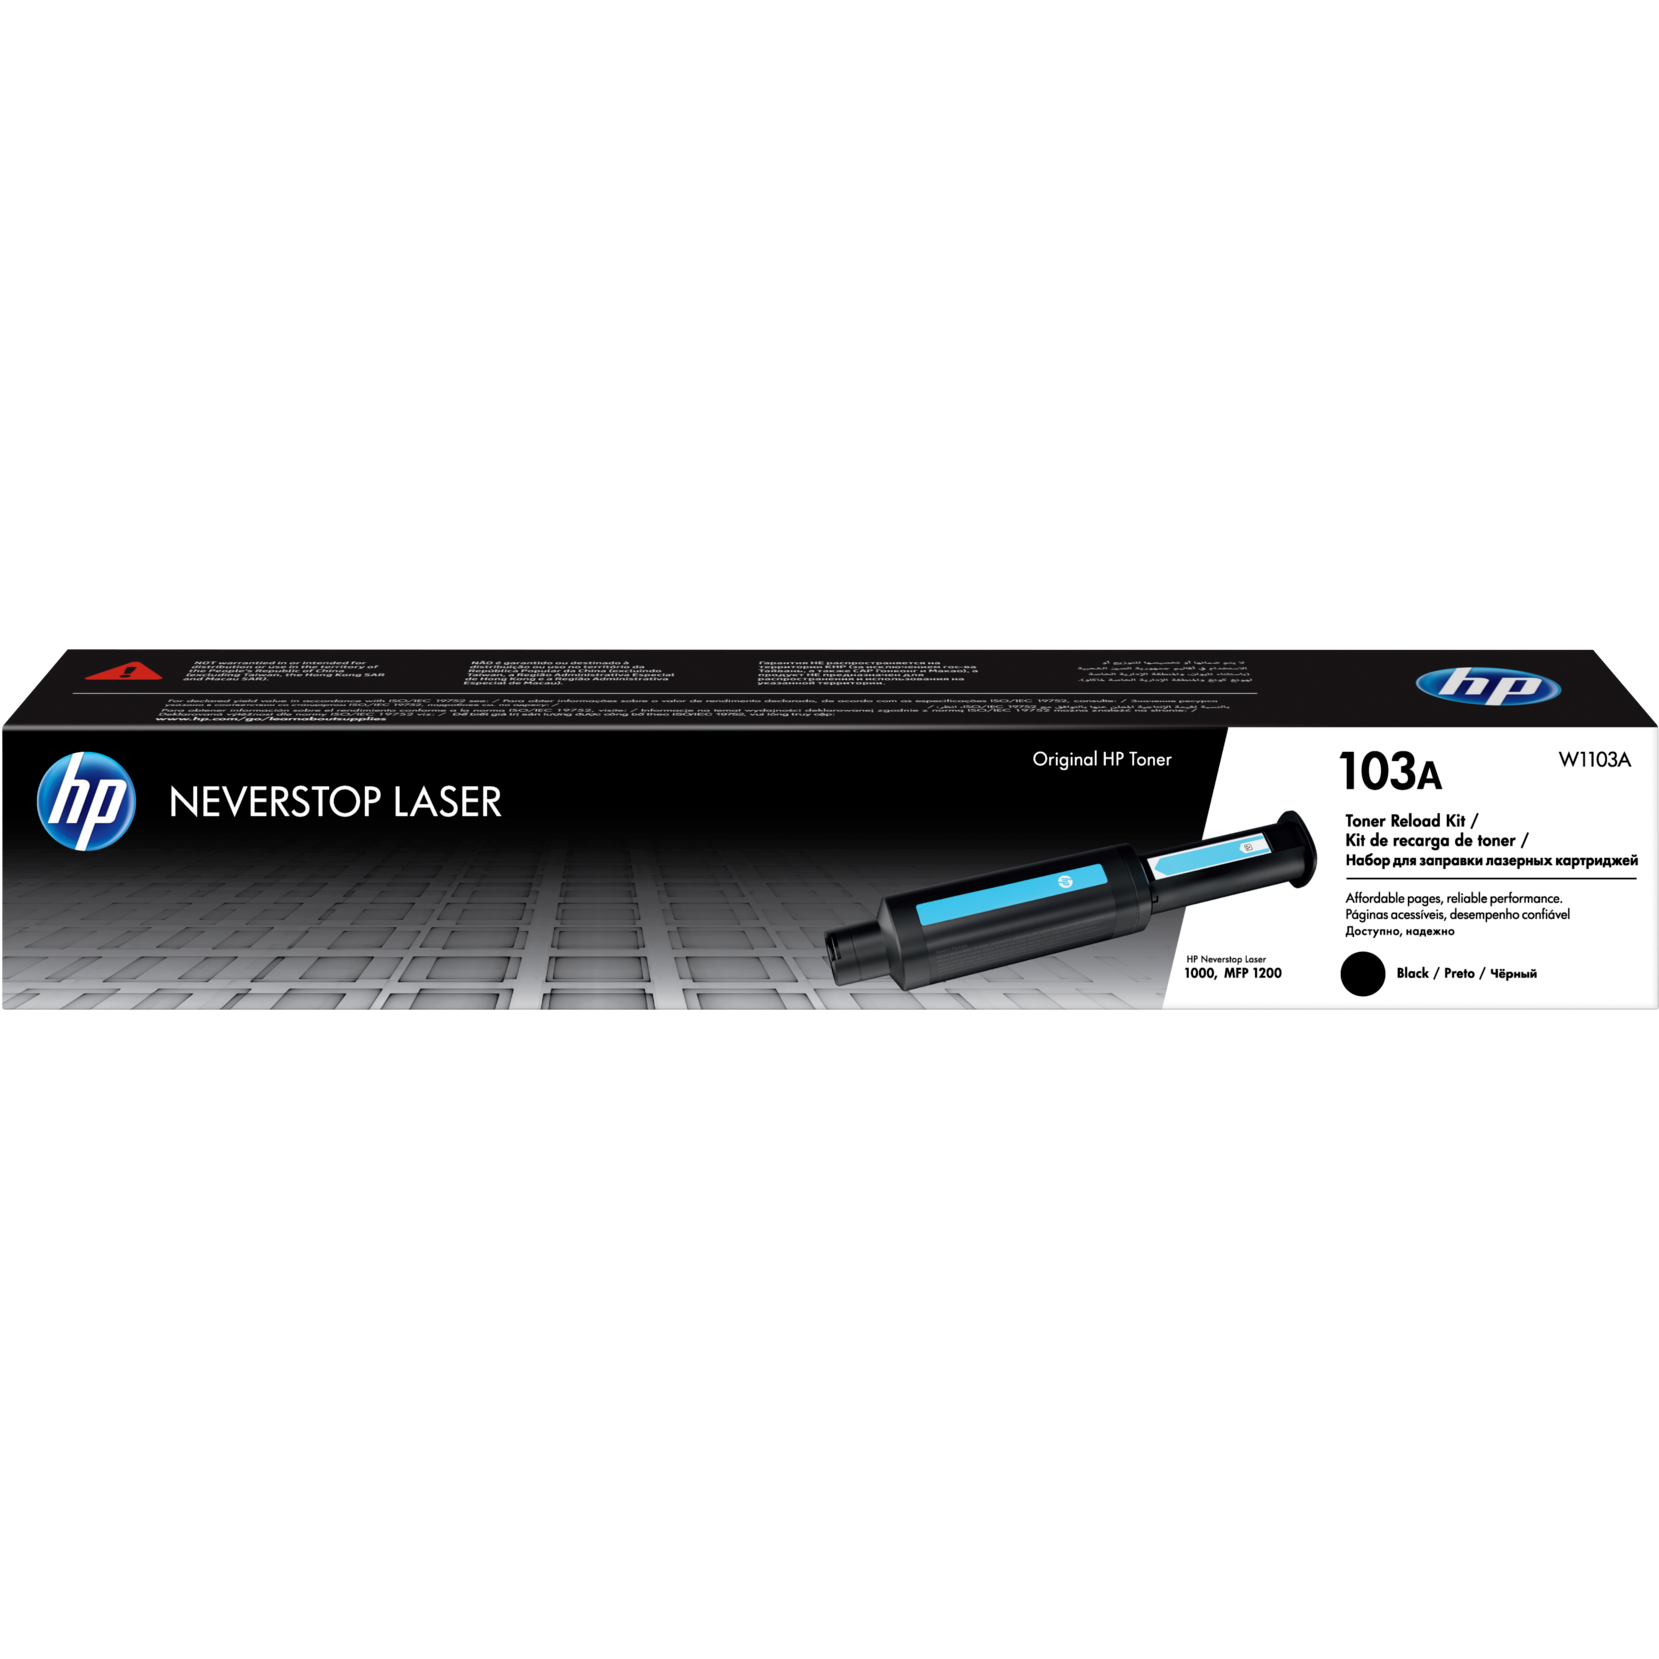 Toner HP W1103A, Neverstop Laser MFP 1200, 1000, black, 103A, originál